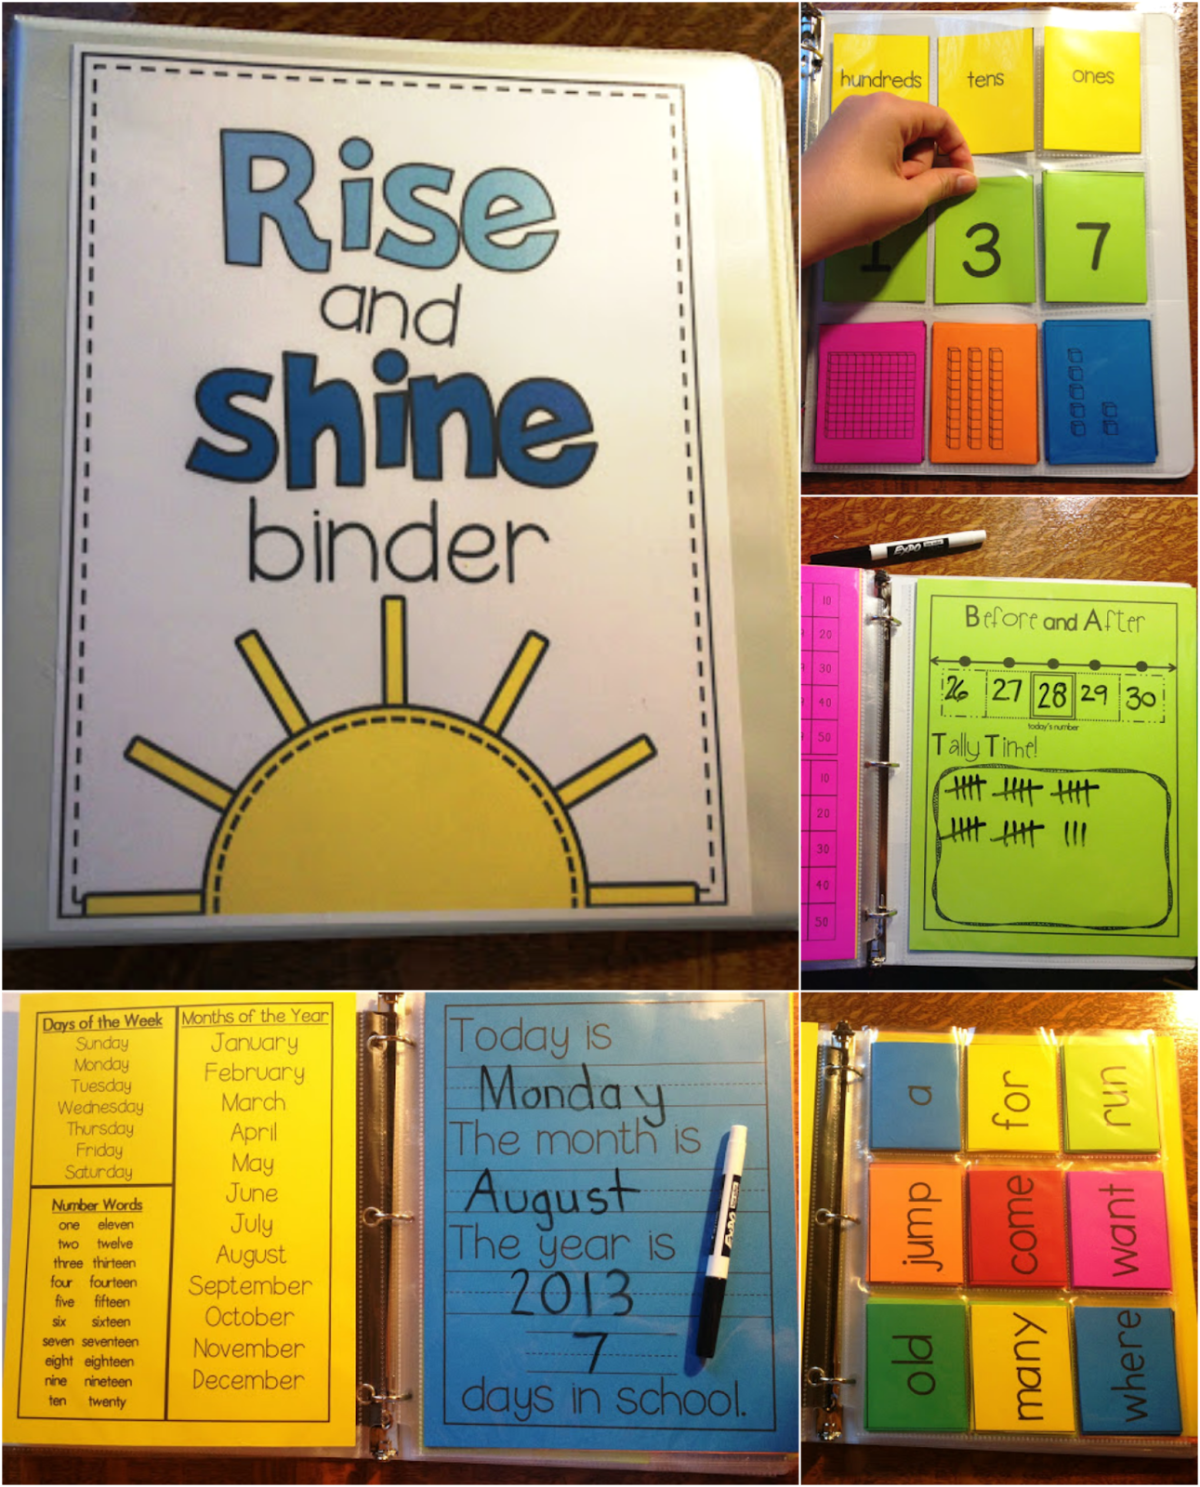 http://www.teacherspayteachers.com/Product/Rise-and-Shine-Binder-762792